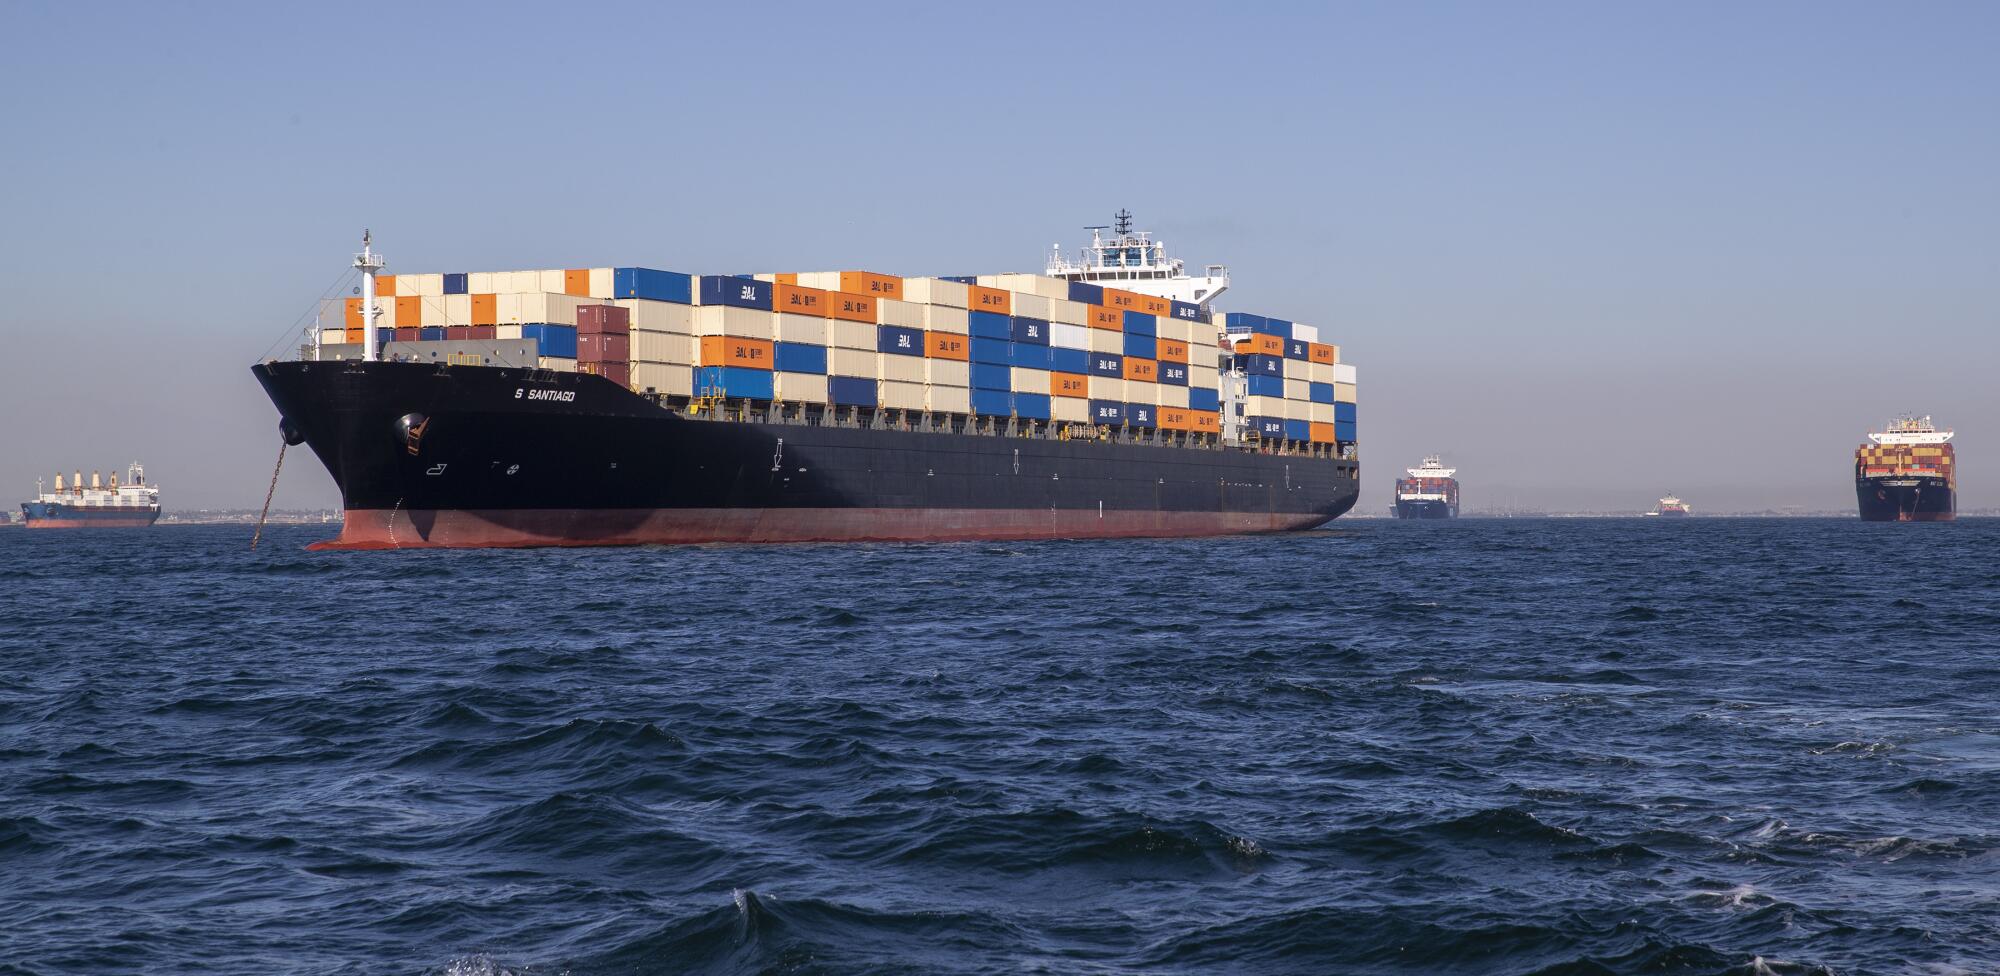 Cargo ships anchored at sea